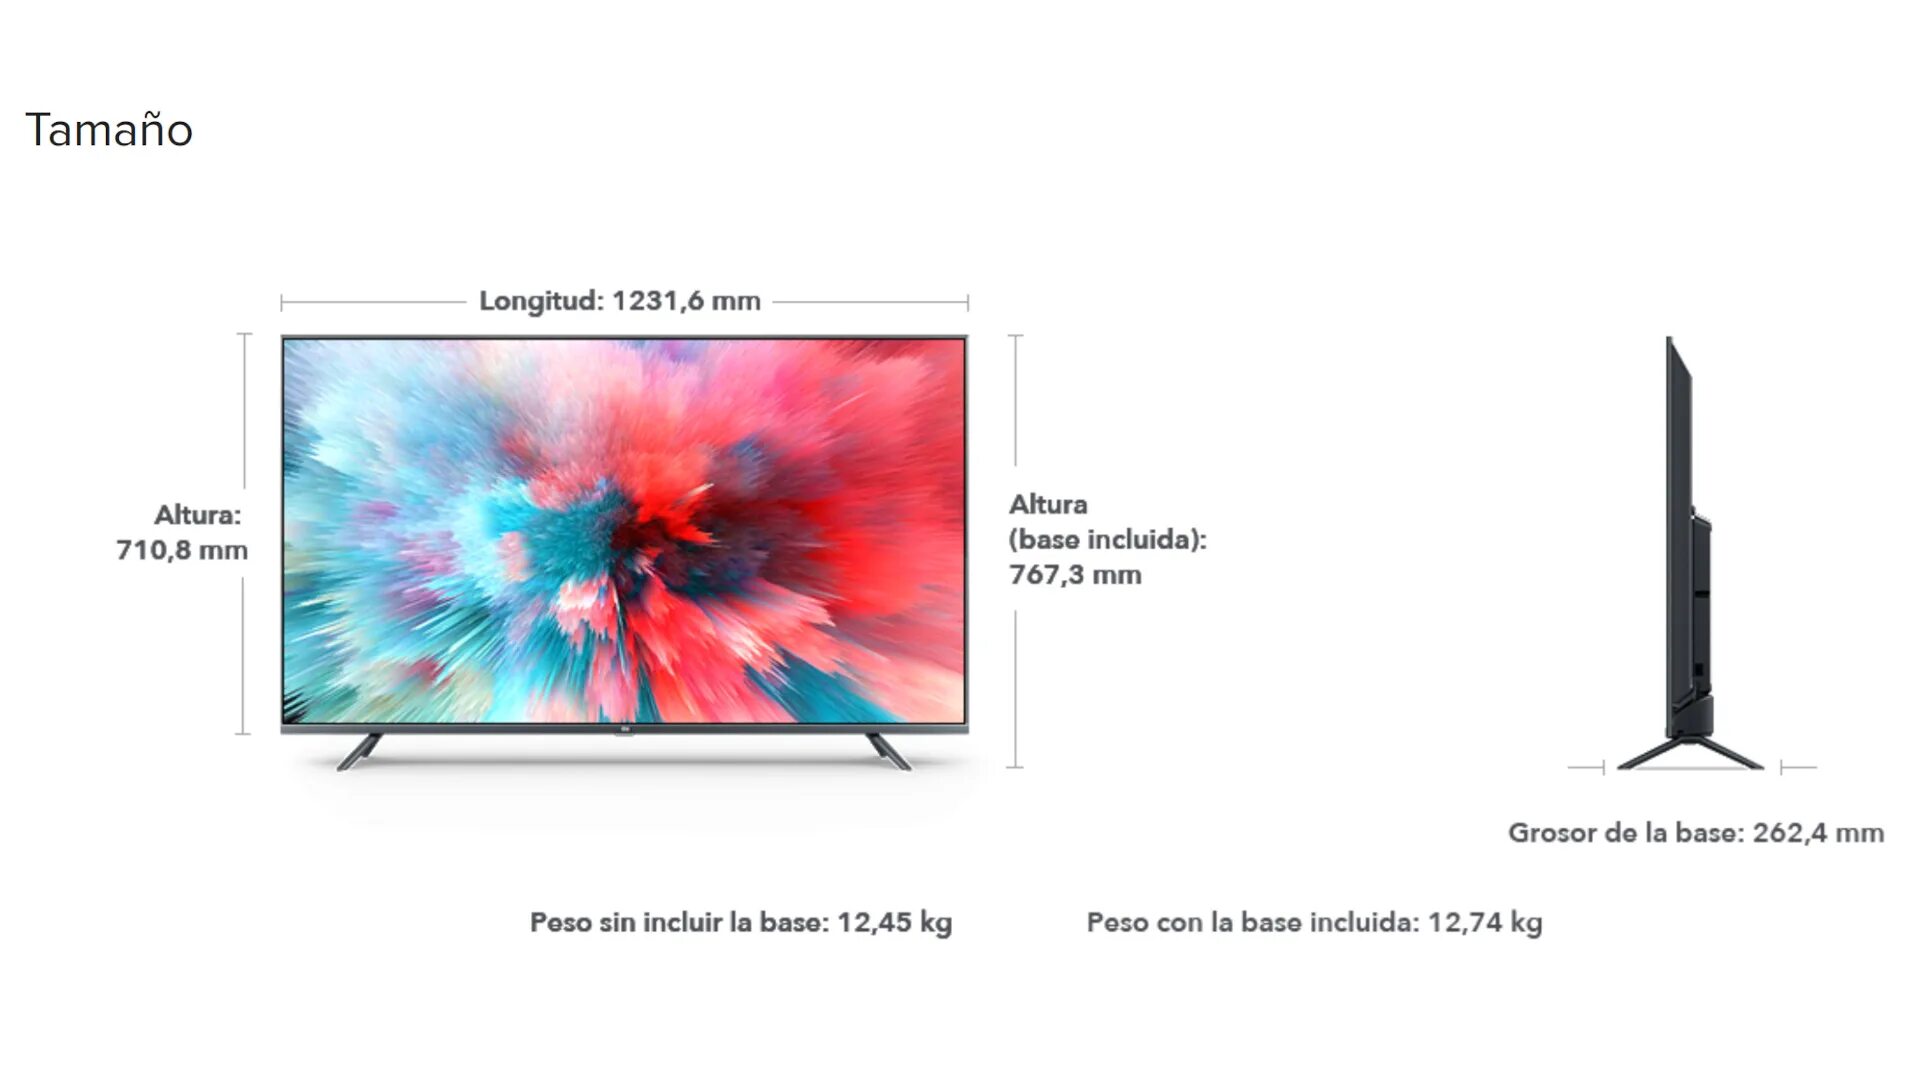 Размеры led телевизоров. Телевизор самсунг 55 дюймов габариты в см. Размер телевизора самсунг 50 дюймов. Xiaomi mi TV 4s 55 Размеры. Телевизор самсунг 55 Размеры.